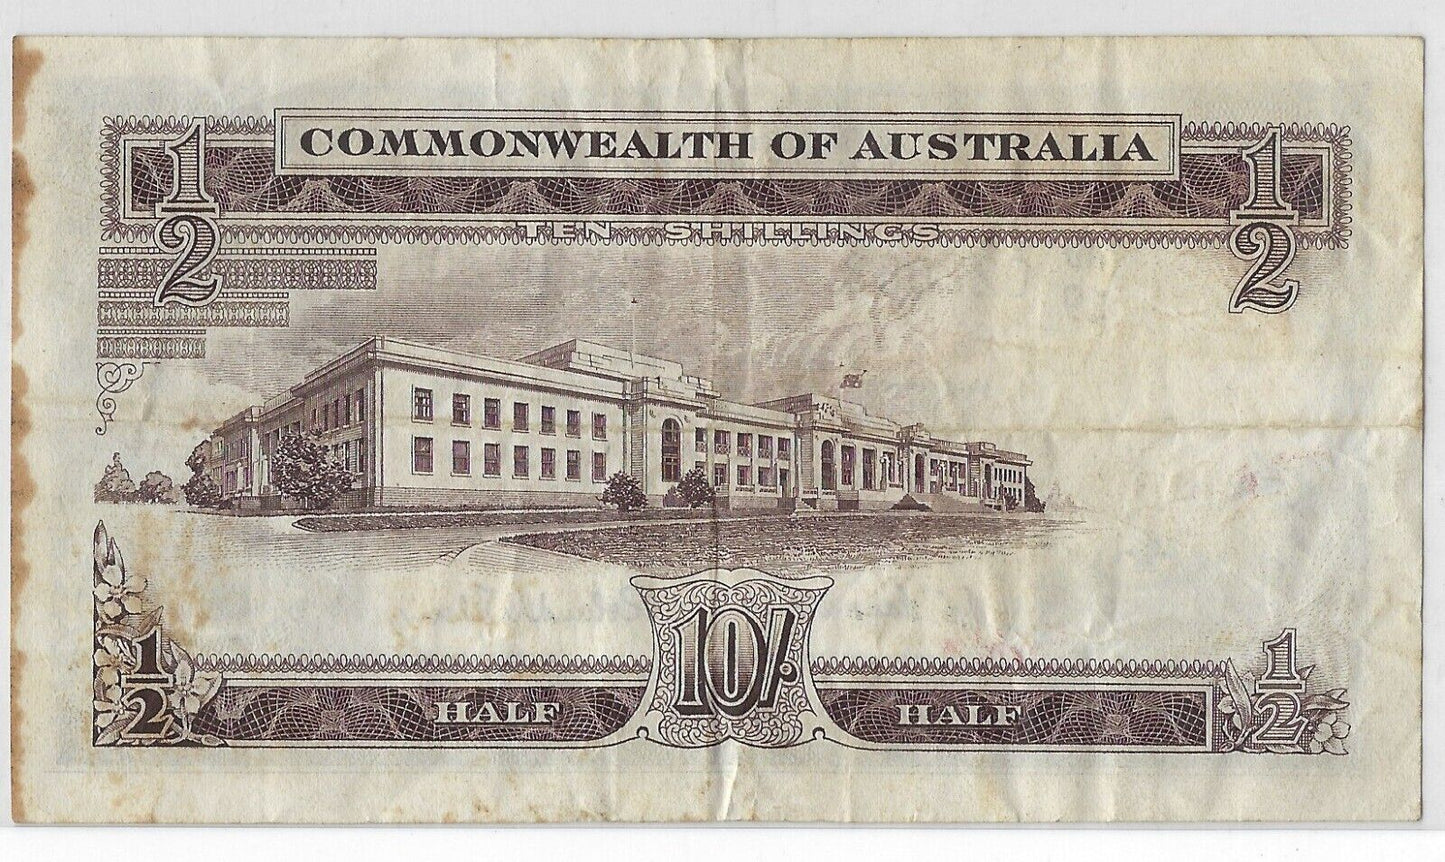 Australia,Commonwealth,10 shillings (1954),AD/19  022063.P29a AVF,AU1a